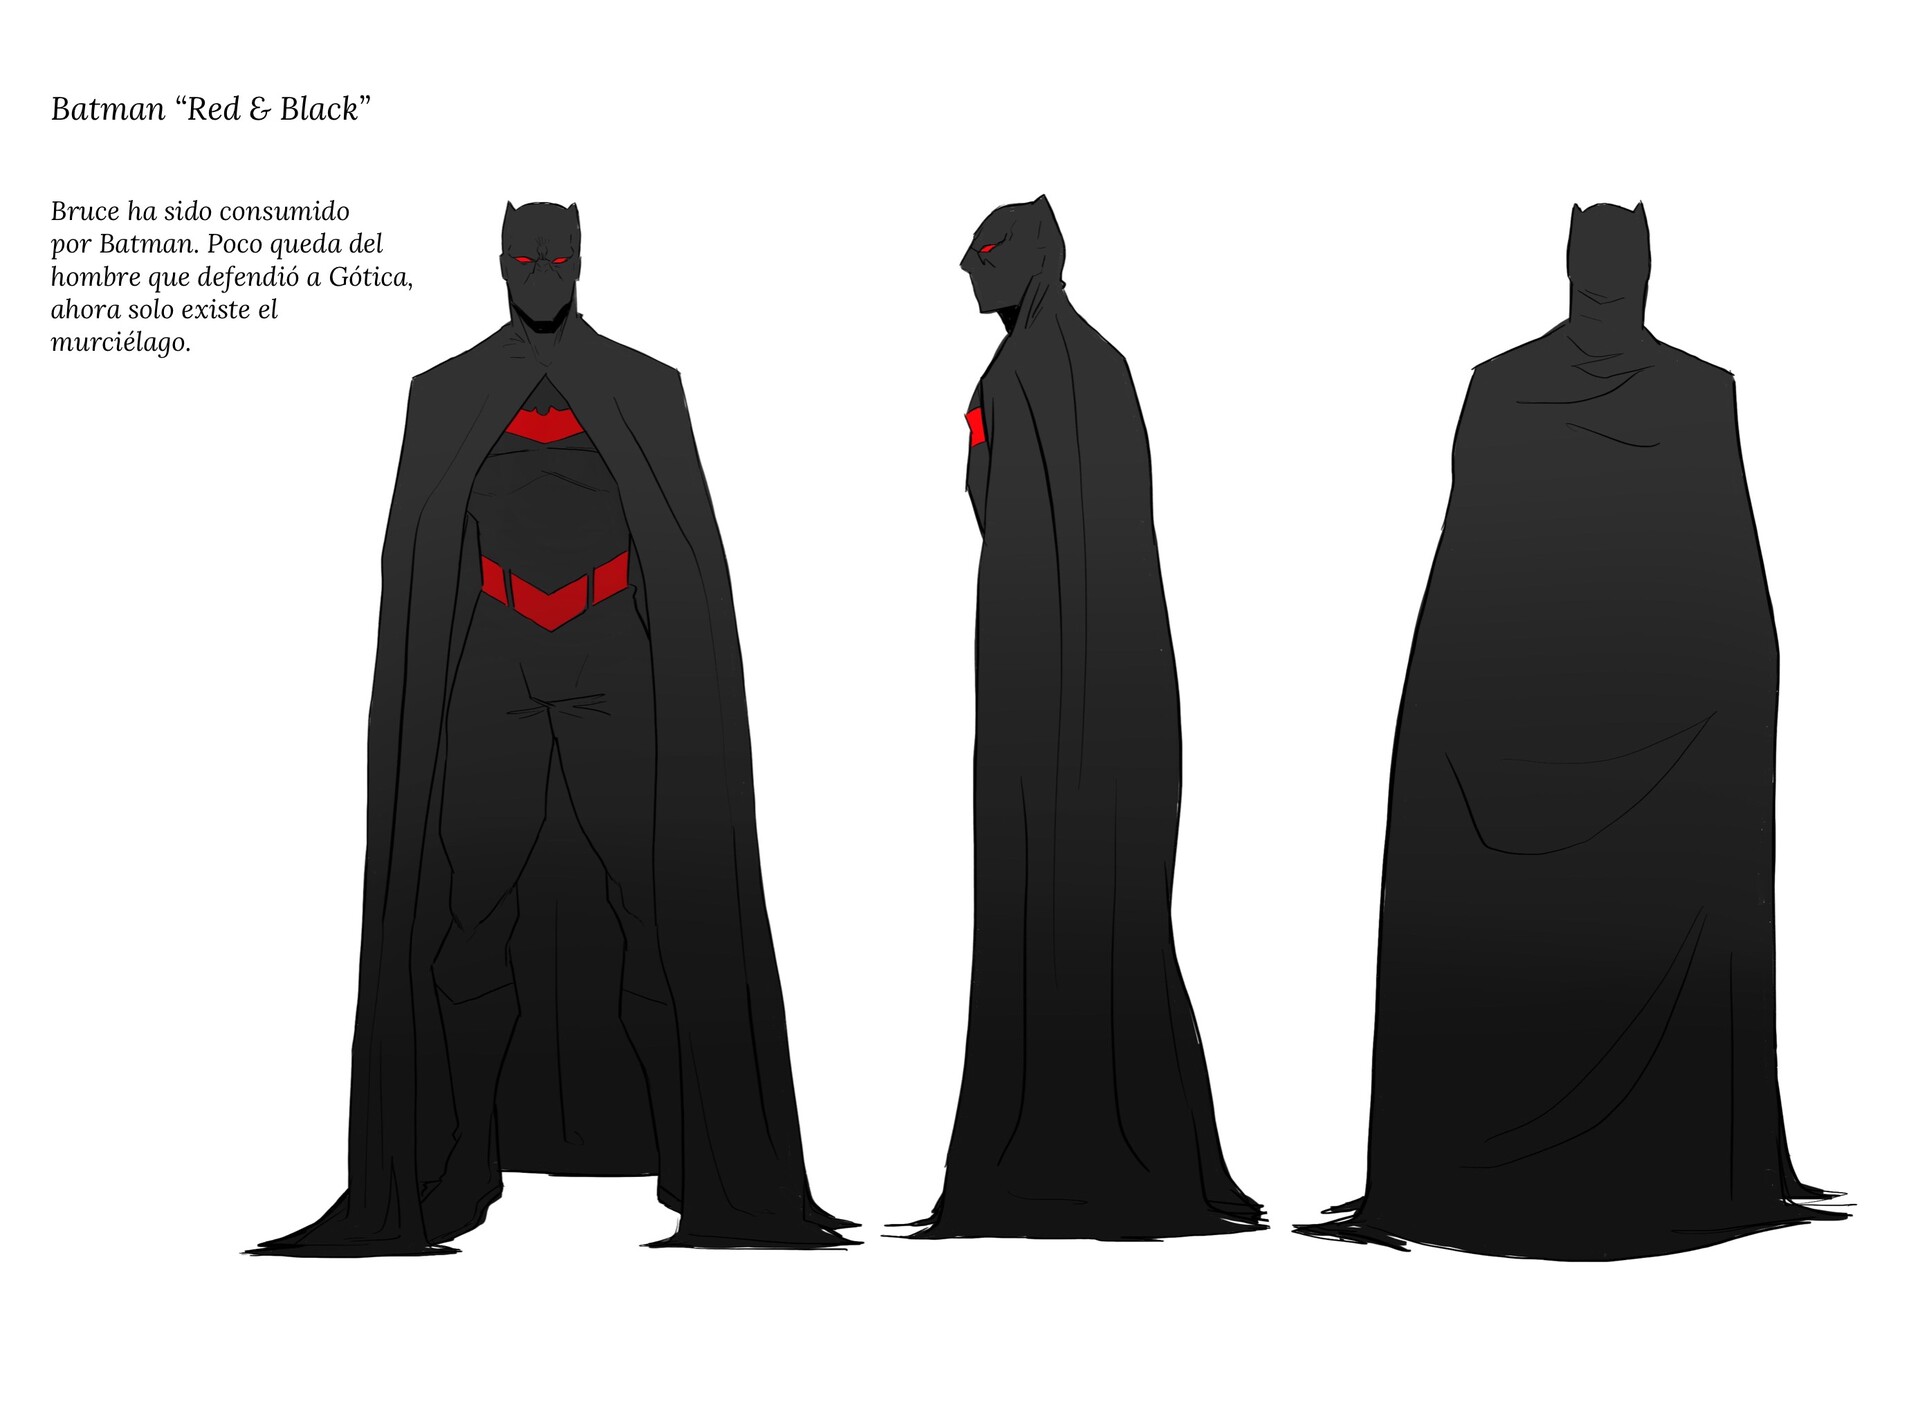 ArtStation - Batman “Red & Black” concept art